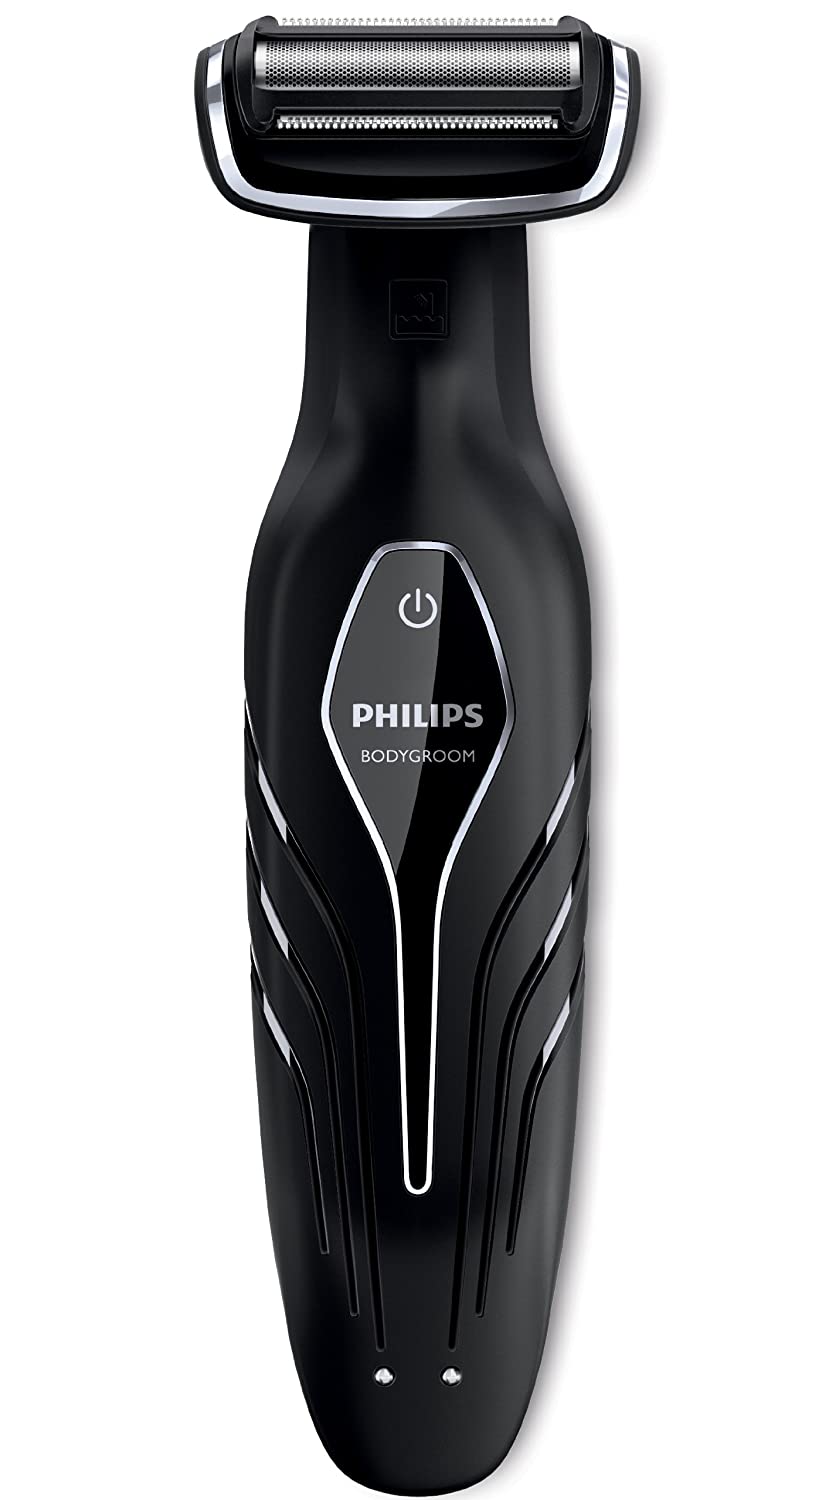 Mengotti Couture® Official Site  Philips Philips Bodygroom Series 5000  Showerproof Body Groomer, Black